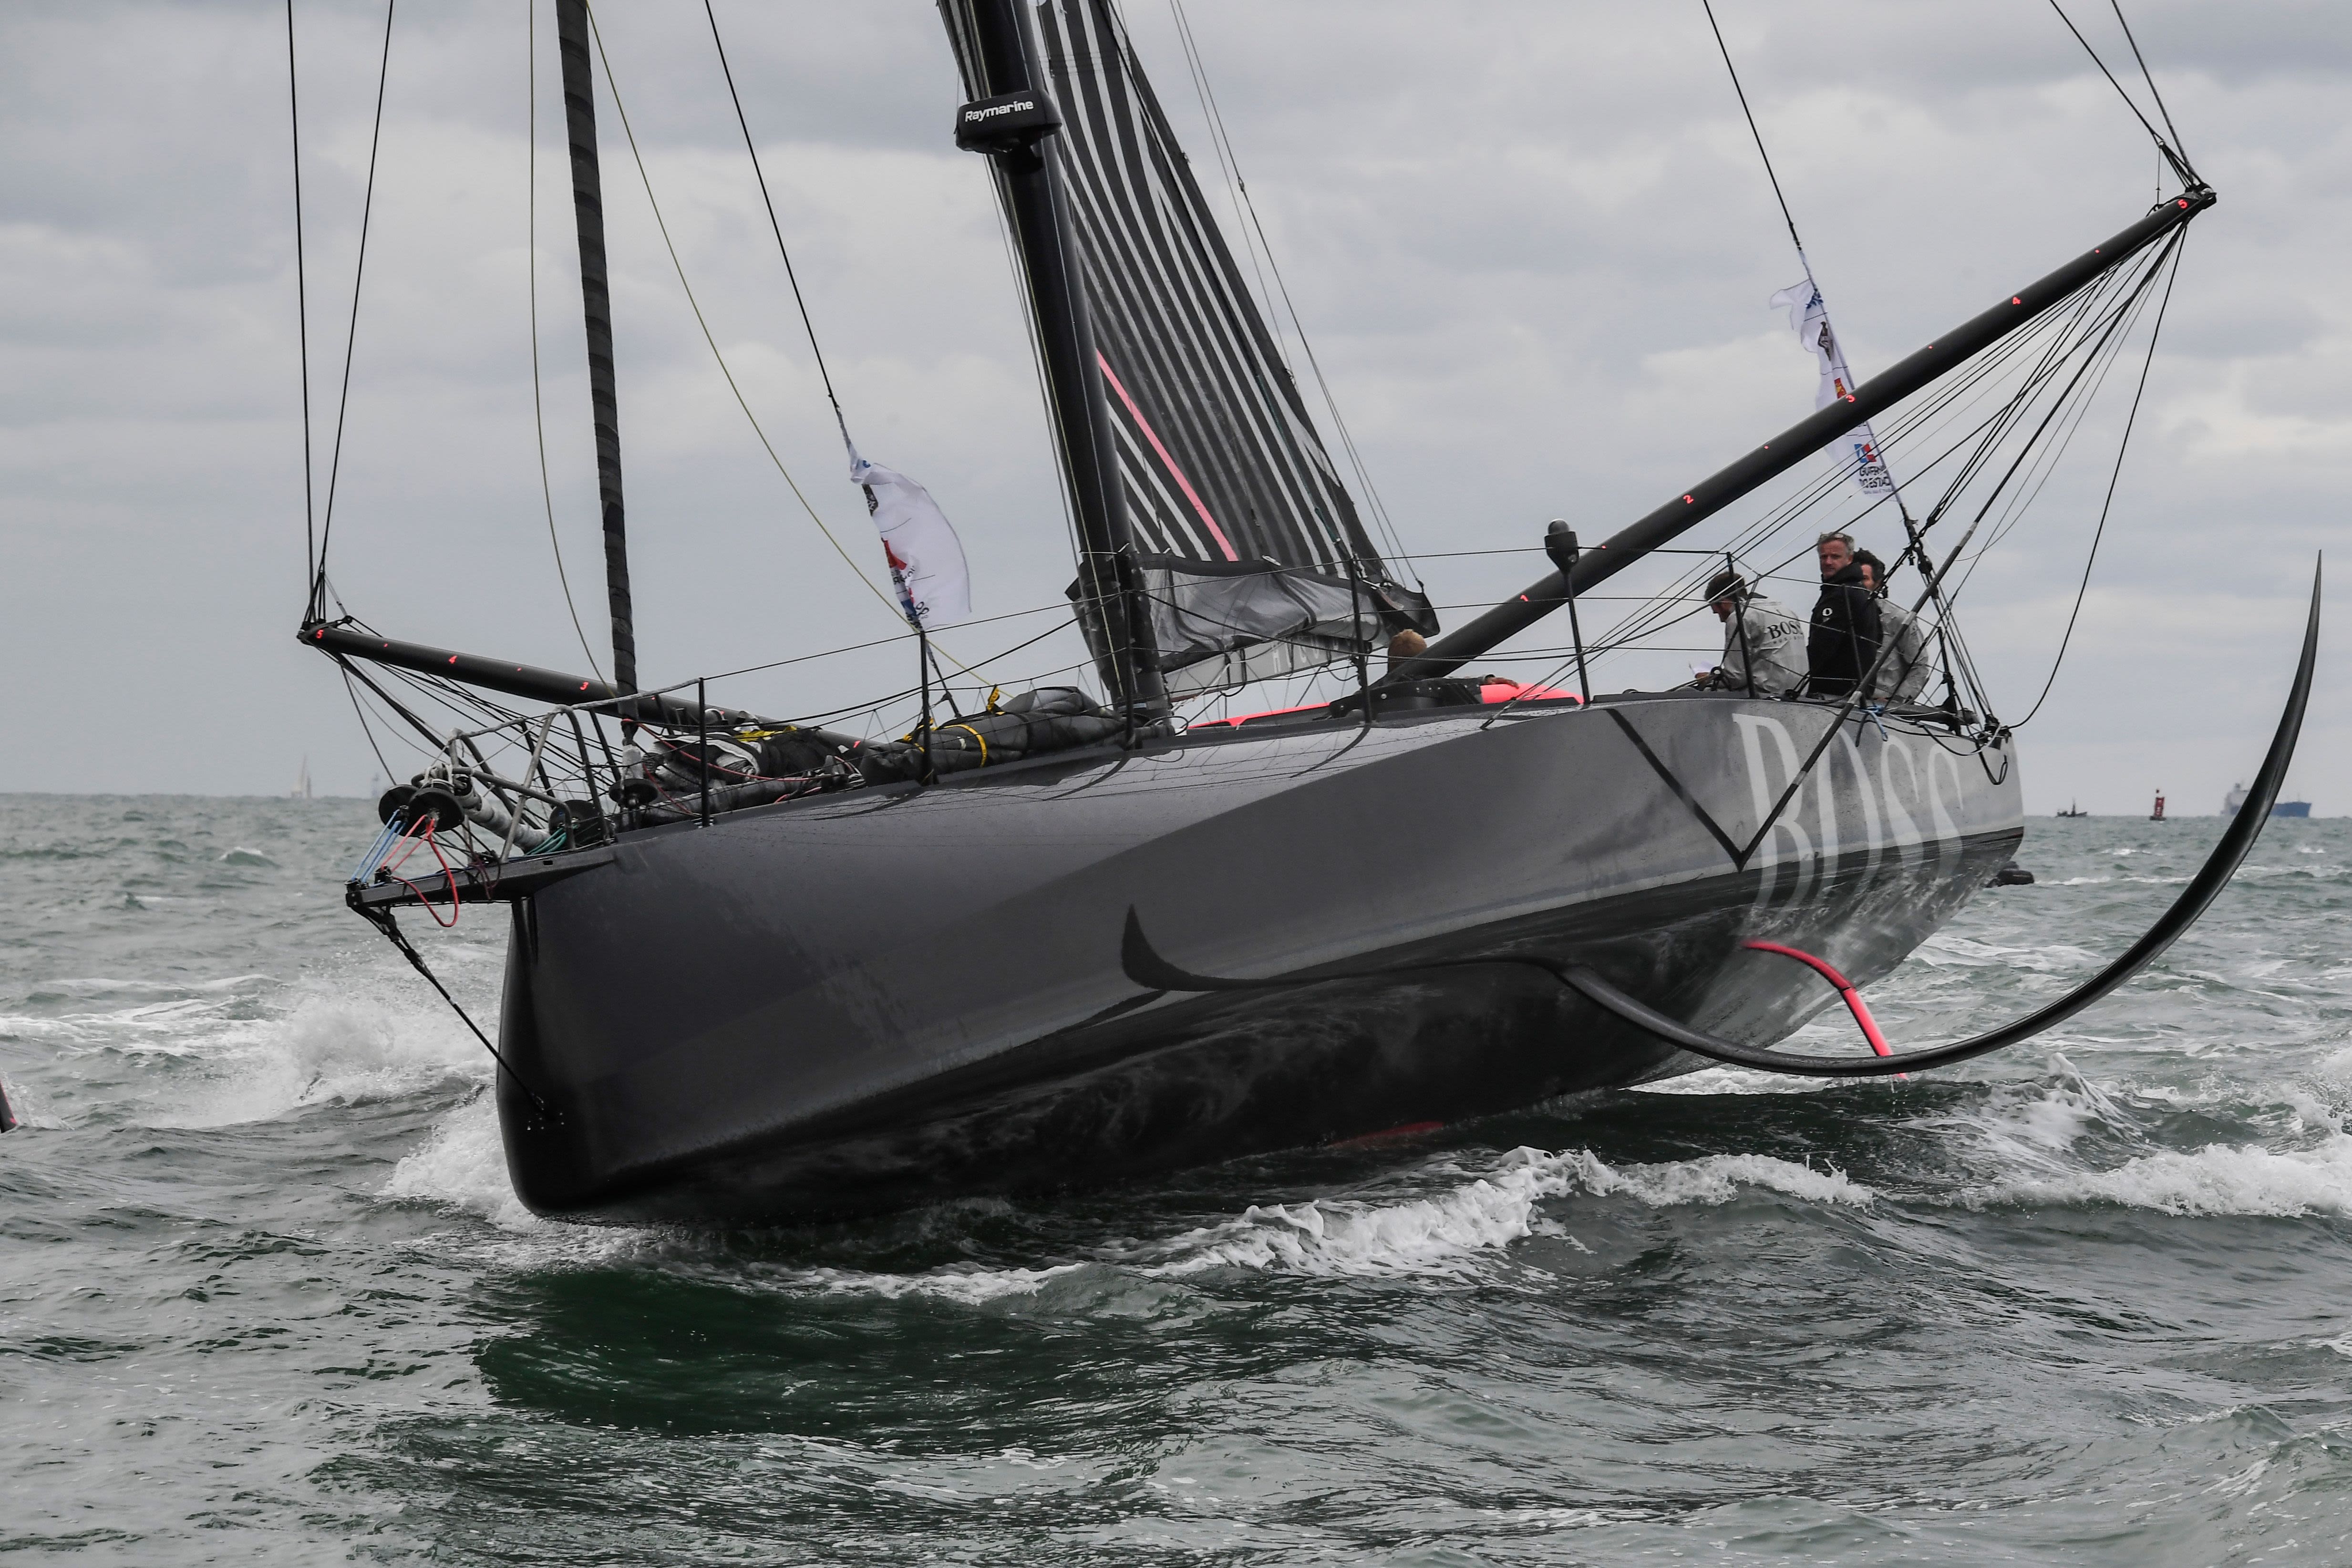 Alex Thomson's $7.7 million Hugo racing yacht damaged in collision | CNN